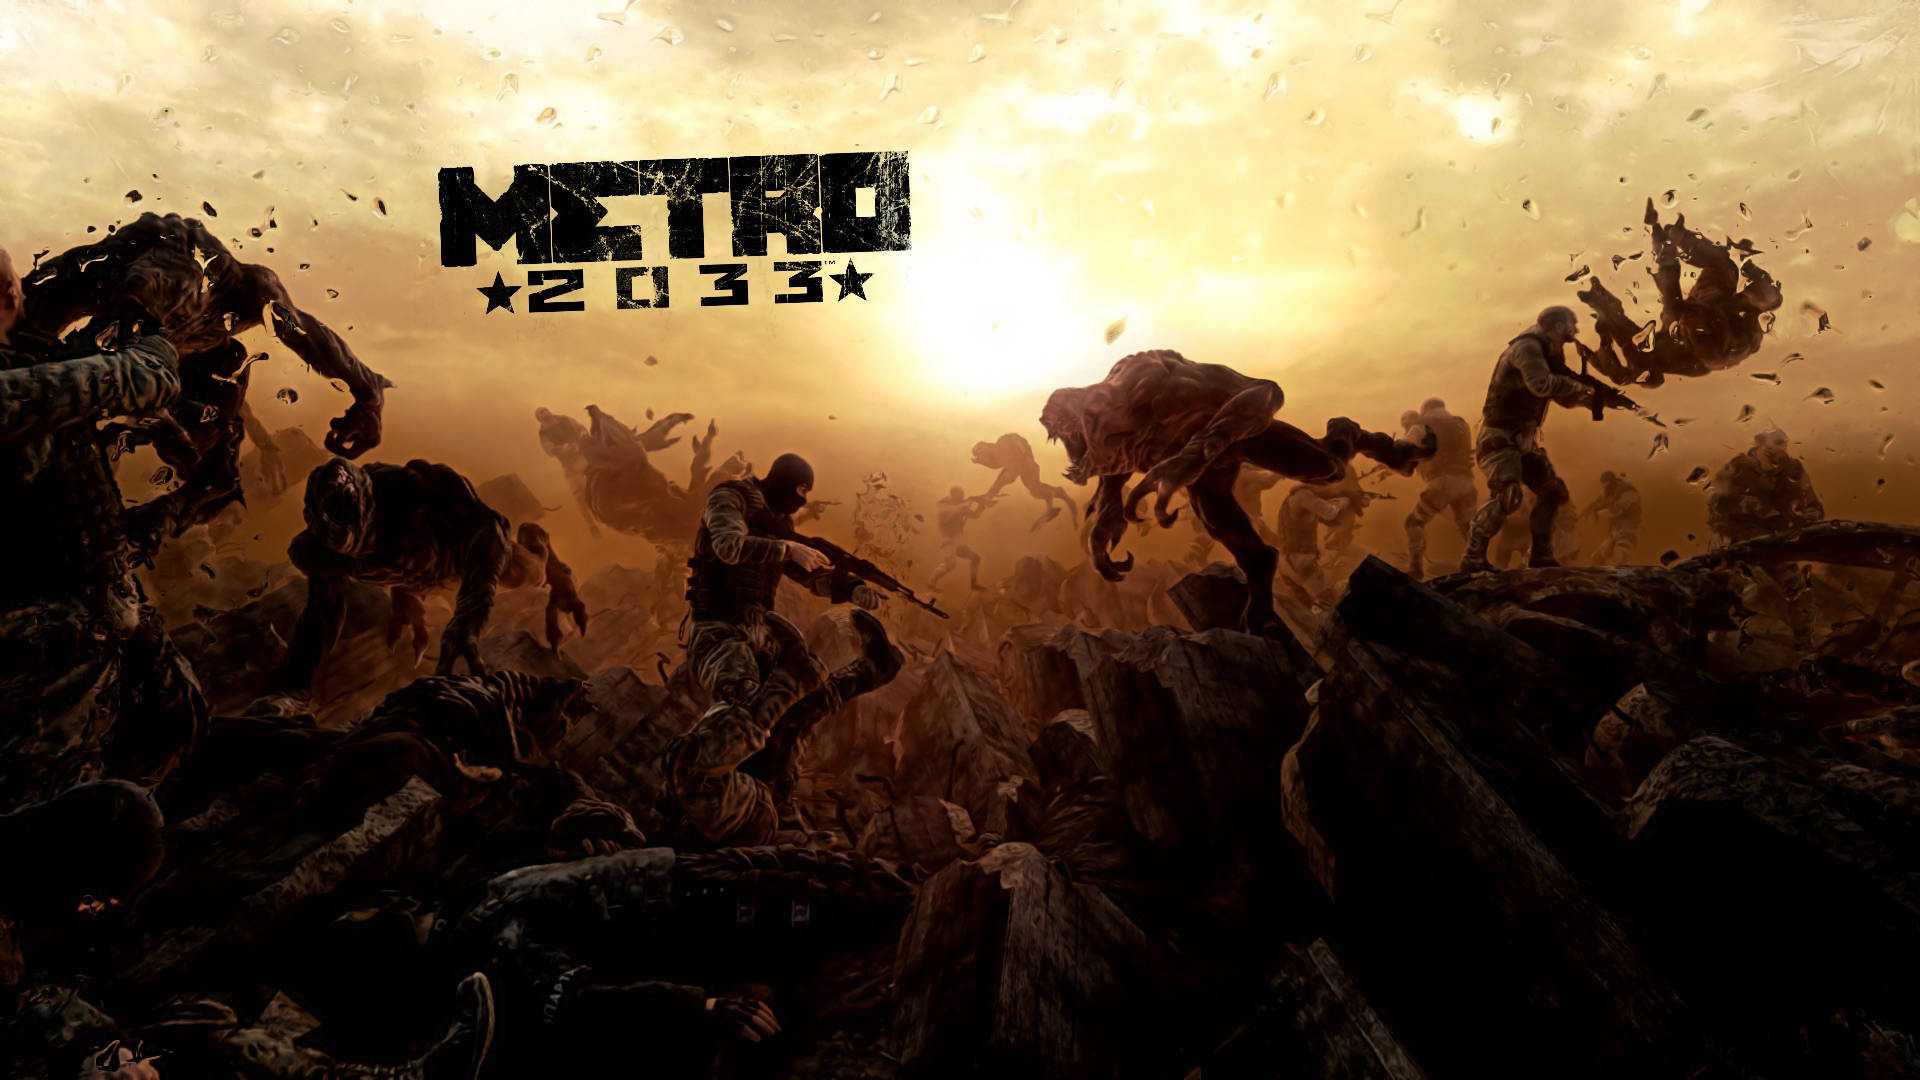 Metro 2033 Battle Poster Background